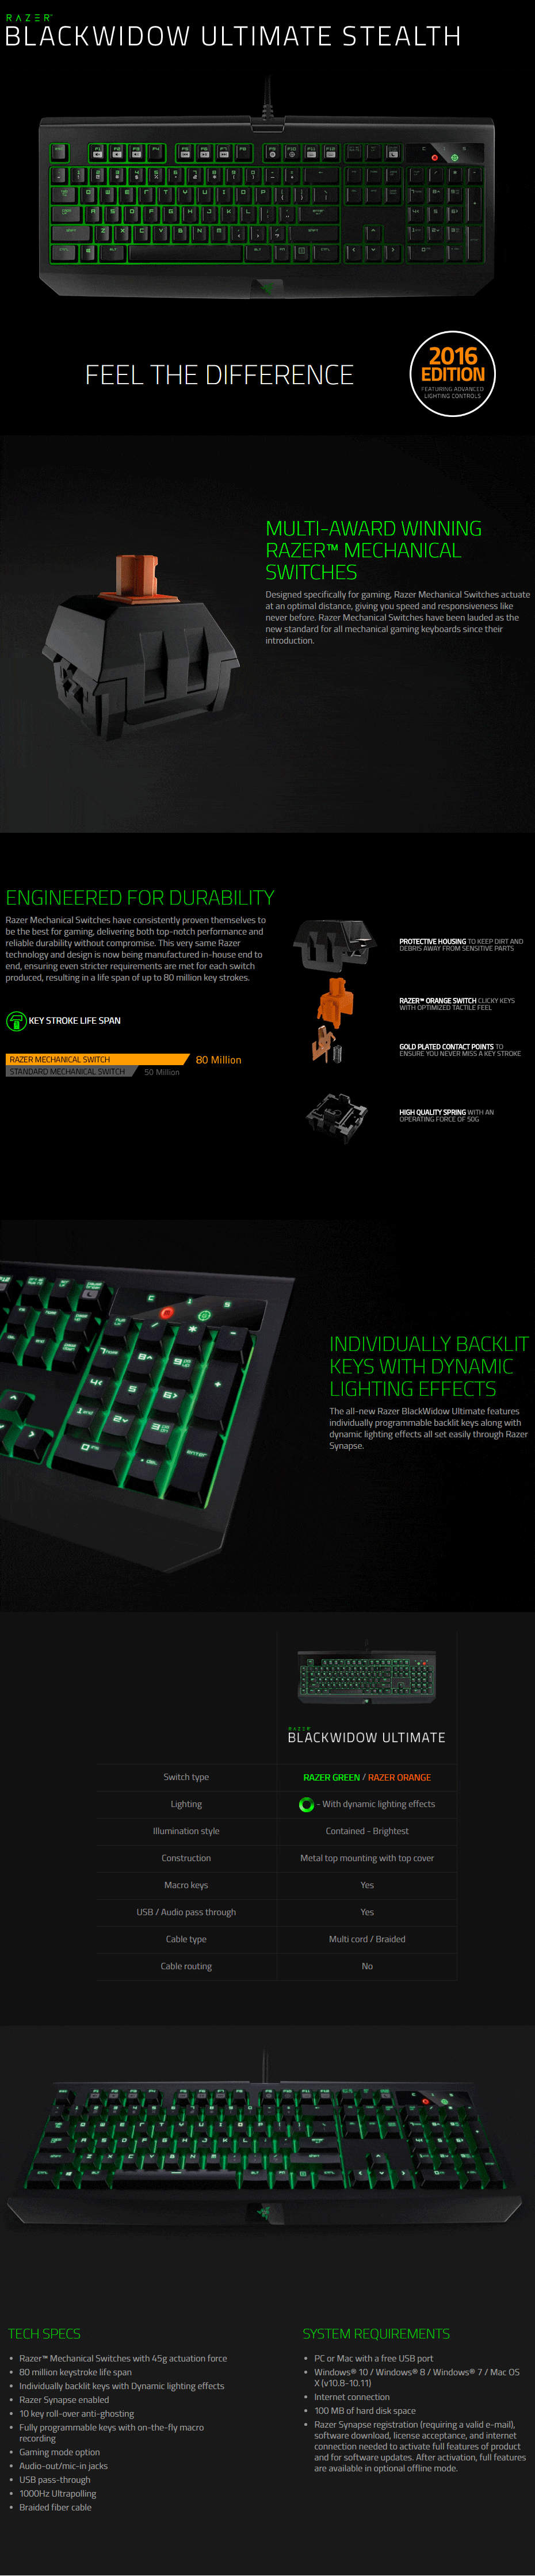 Razer BlackWidow Ultimate Stealth keyboard features